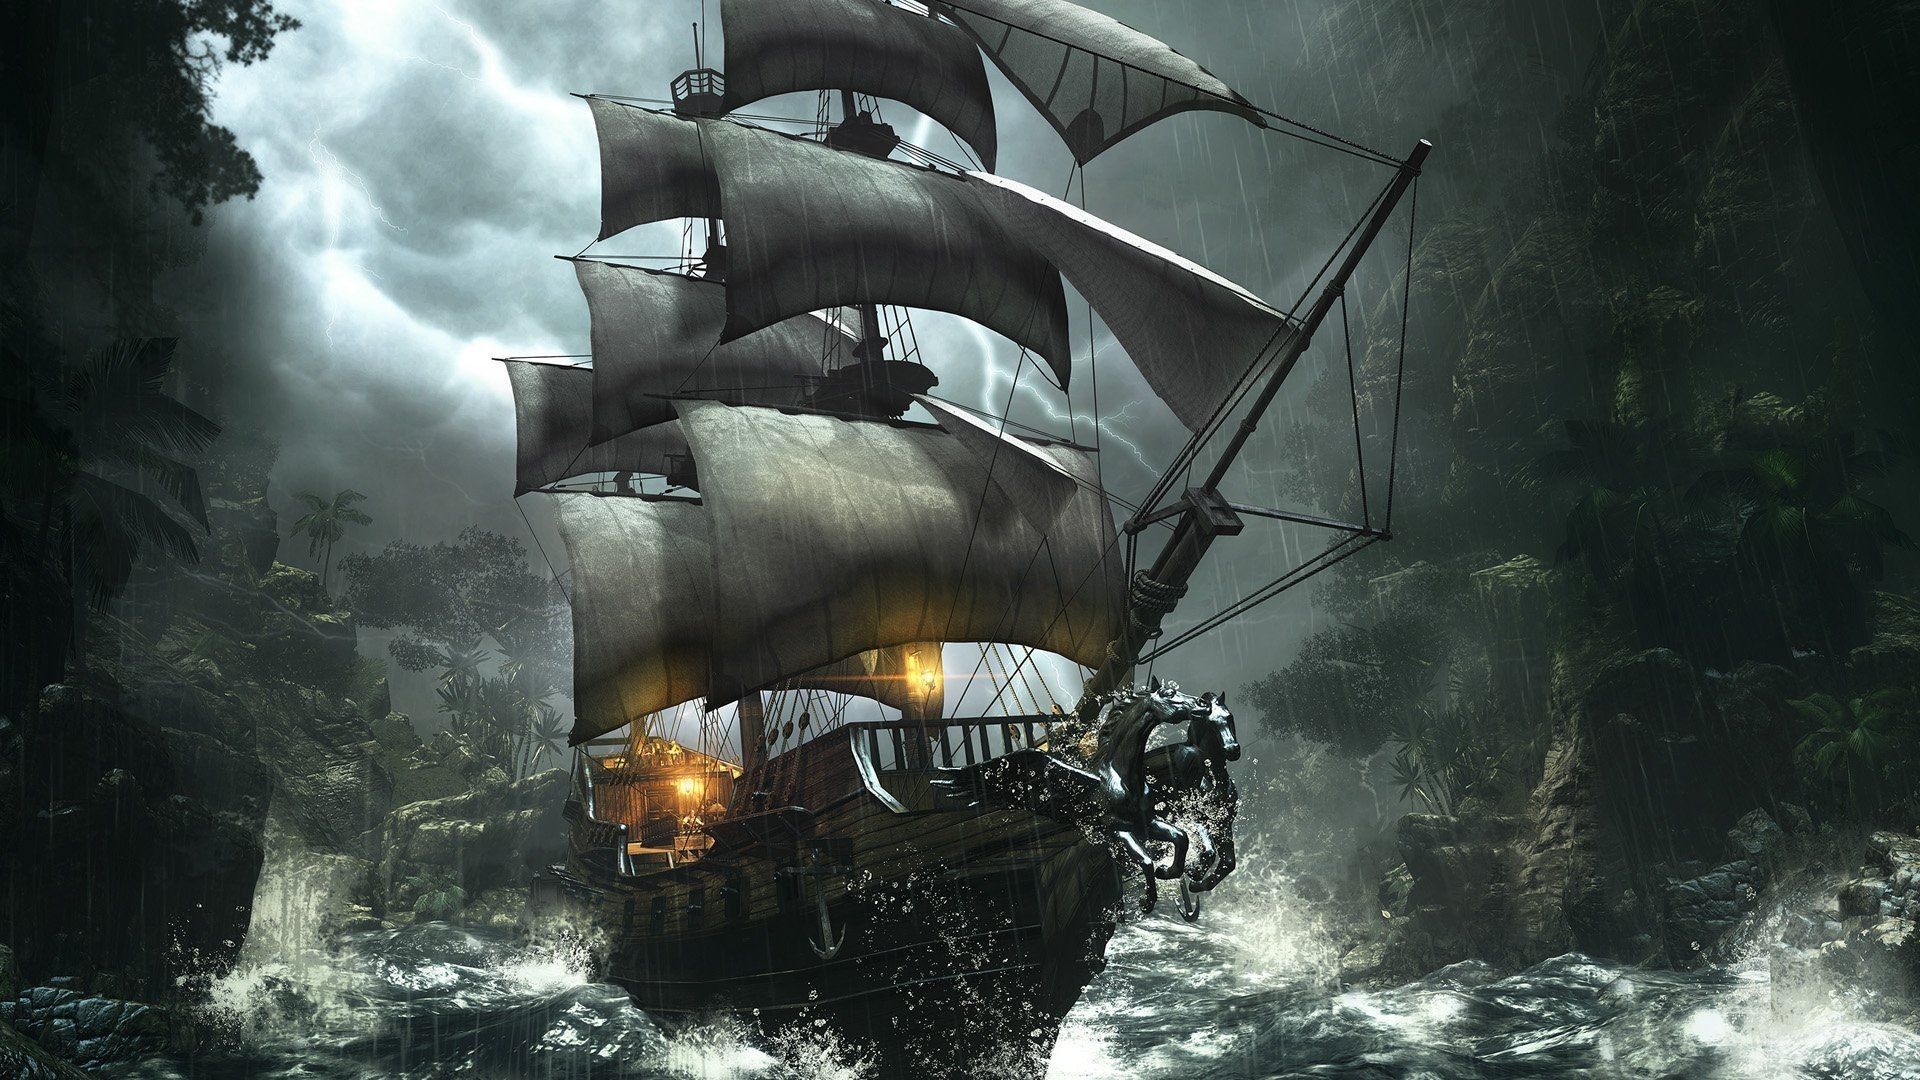 The Black Pearl Ship Wallpaper